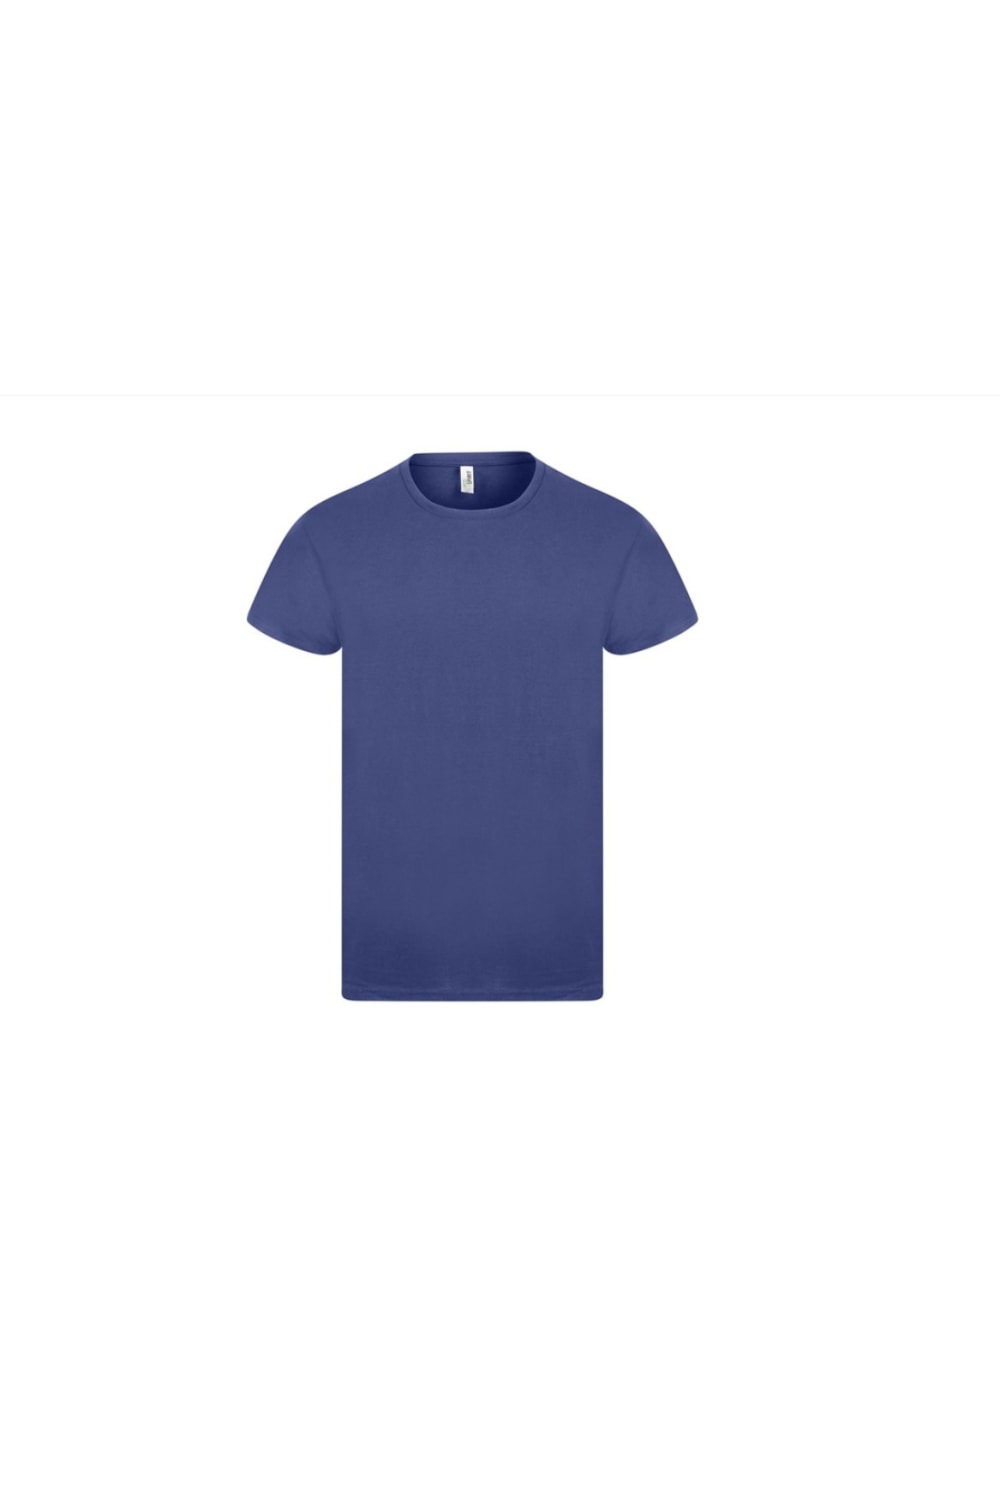 Casual Classic Mens Eco Spirit Organic T-Shirt (Royal Blue)